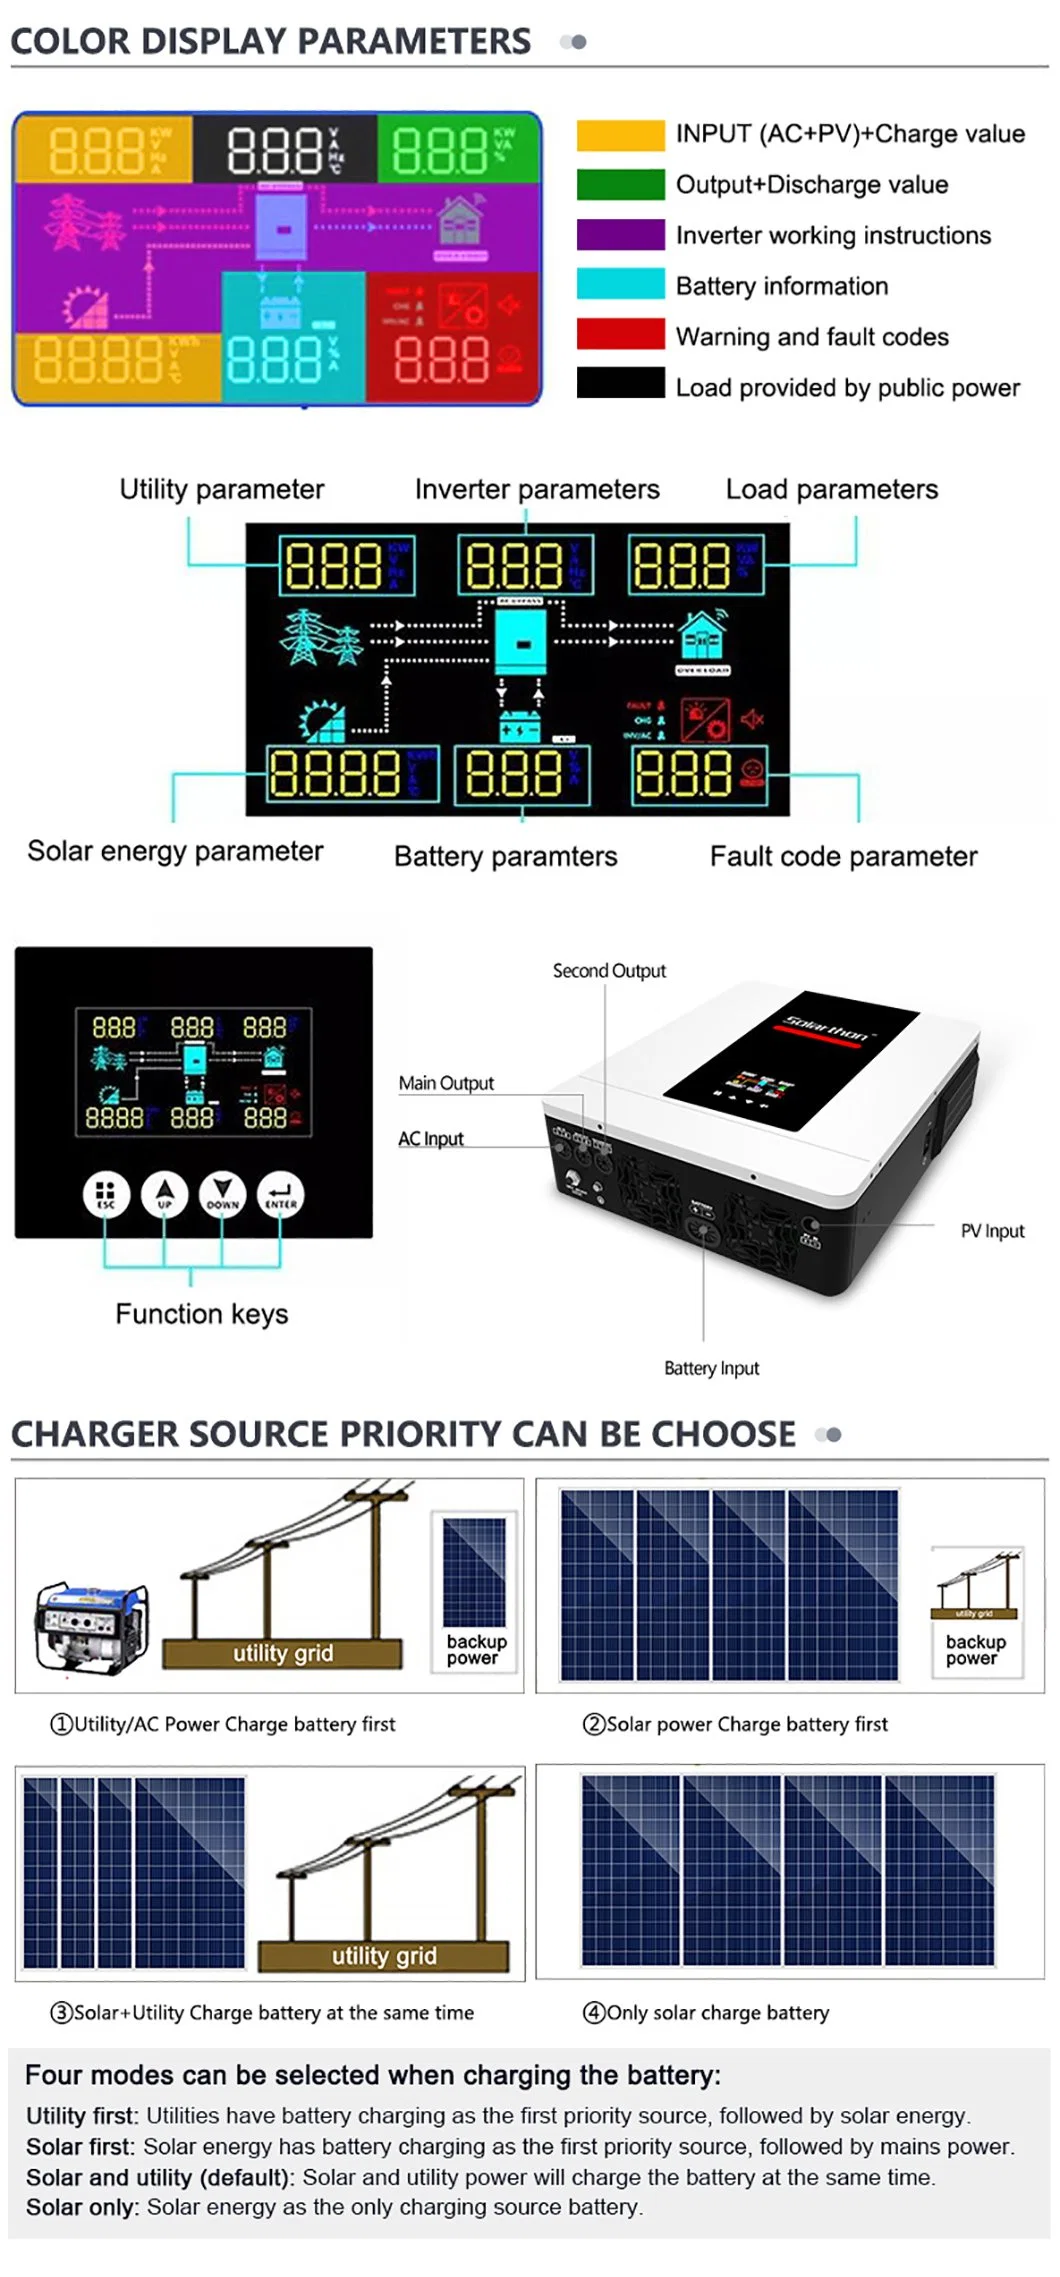 off Grid Solar Power System 5kw 10kw Batteries Home Solar Energy System Wind and Solar Panel Solar Hybrid Inverter Manufacturer